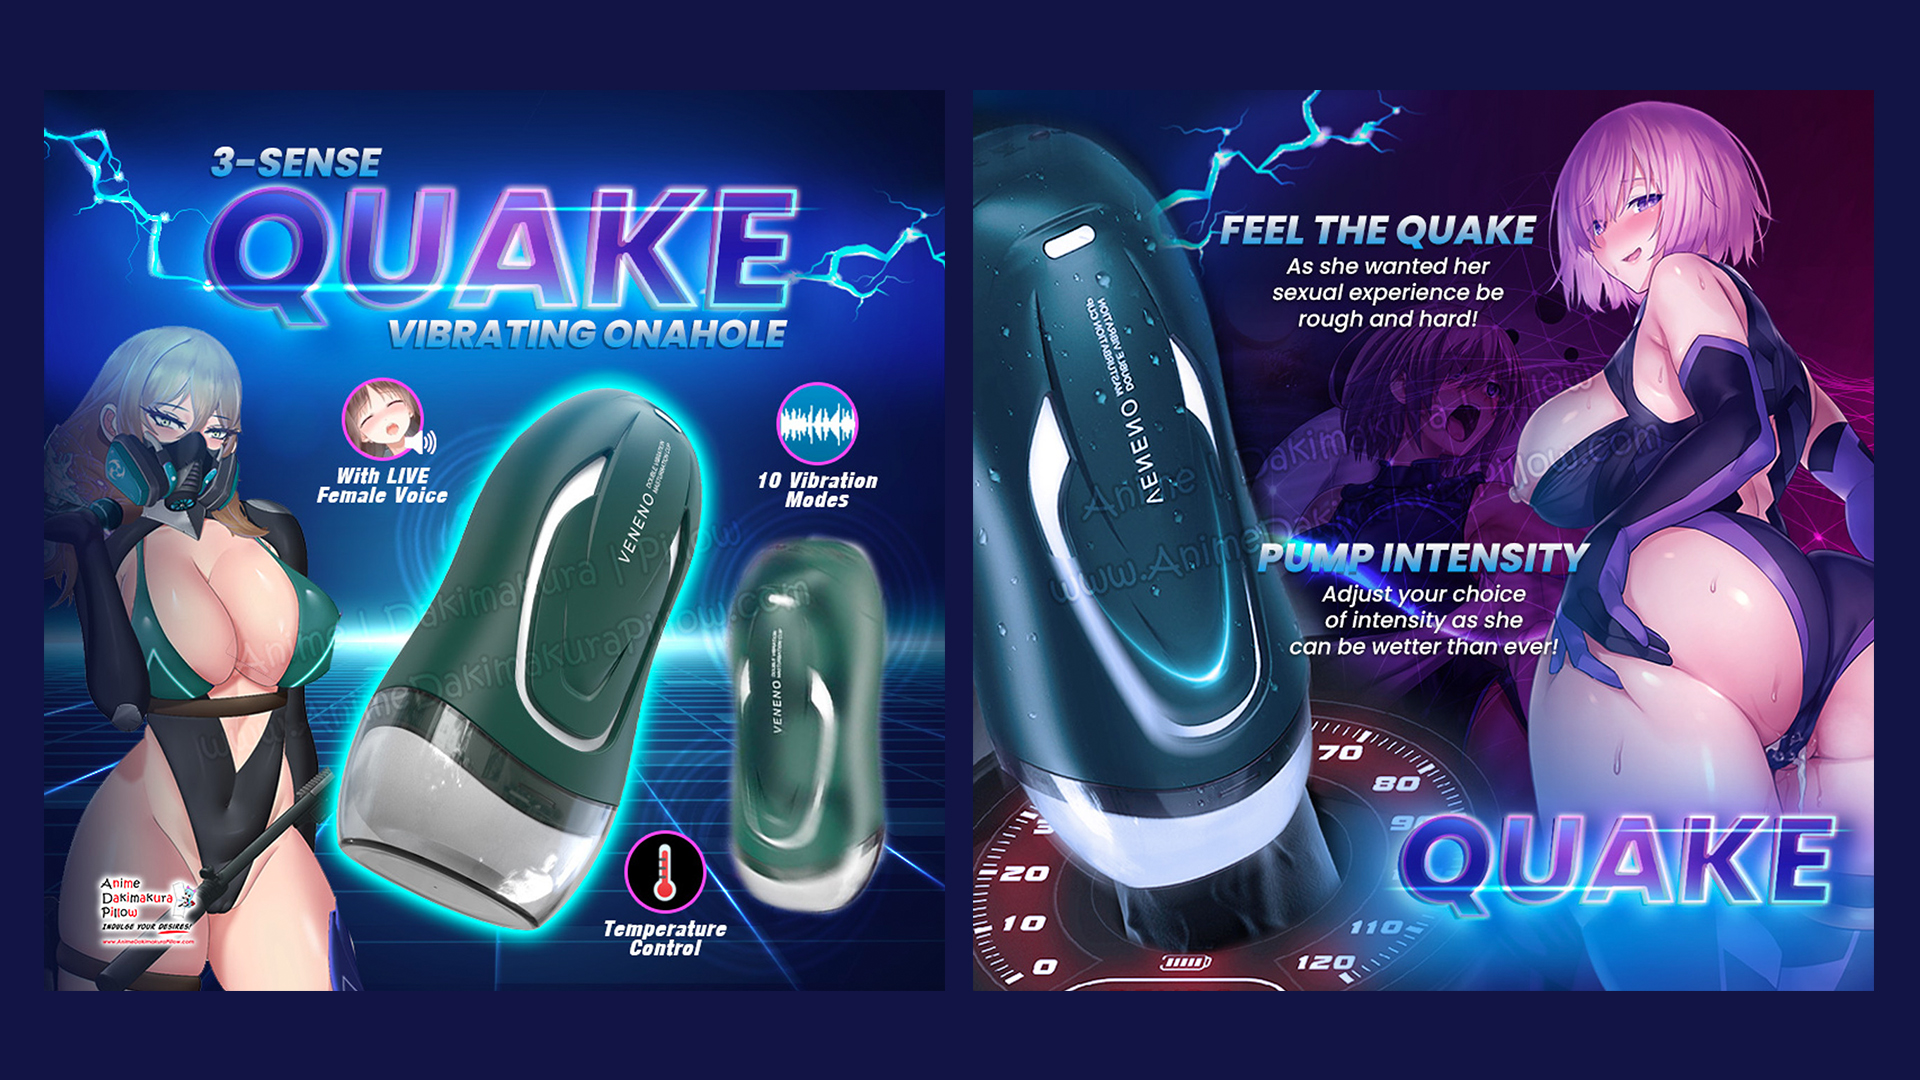 ADP 3-Sense "Quake" Electric Vibrating Onahole